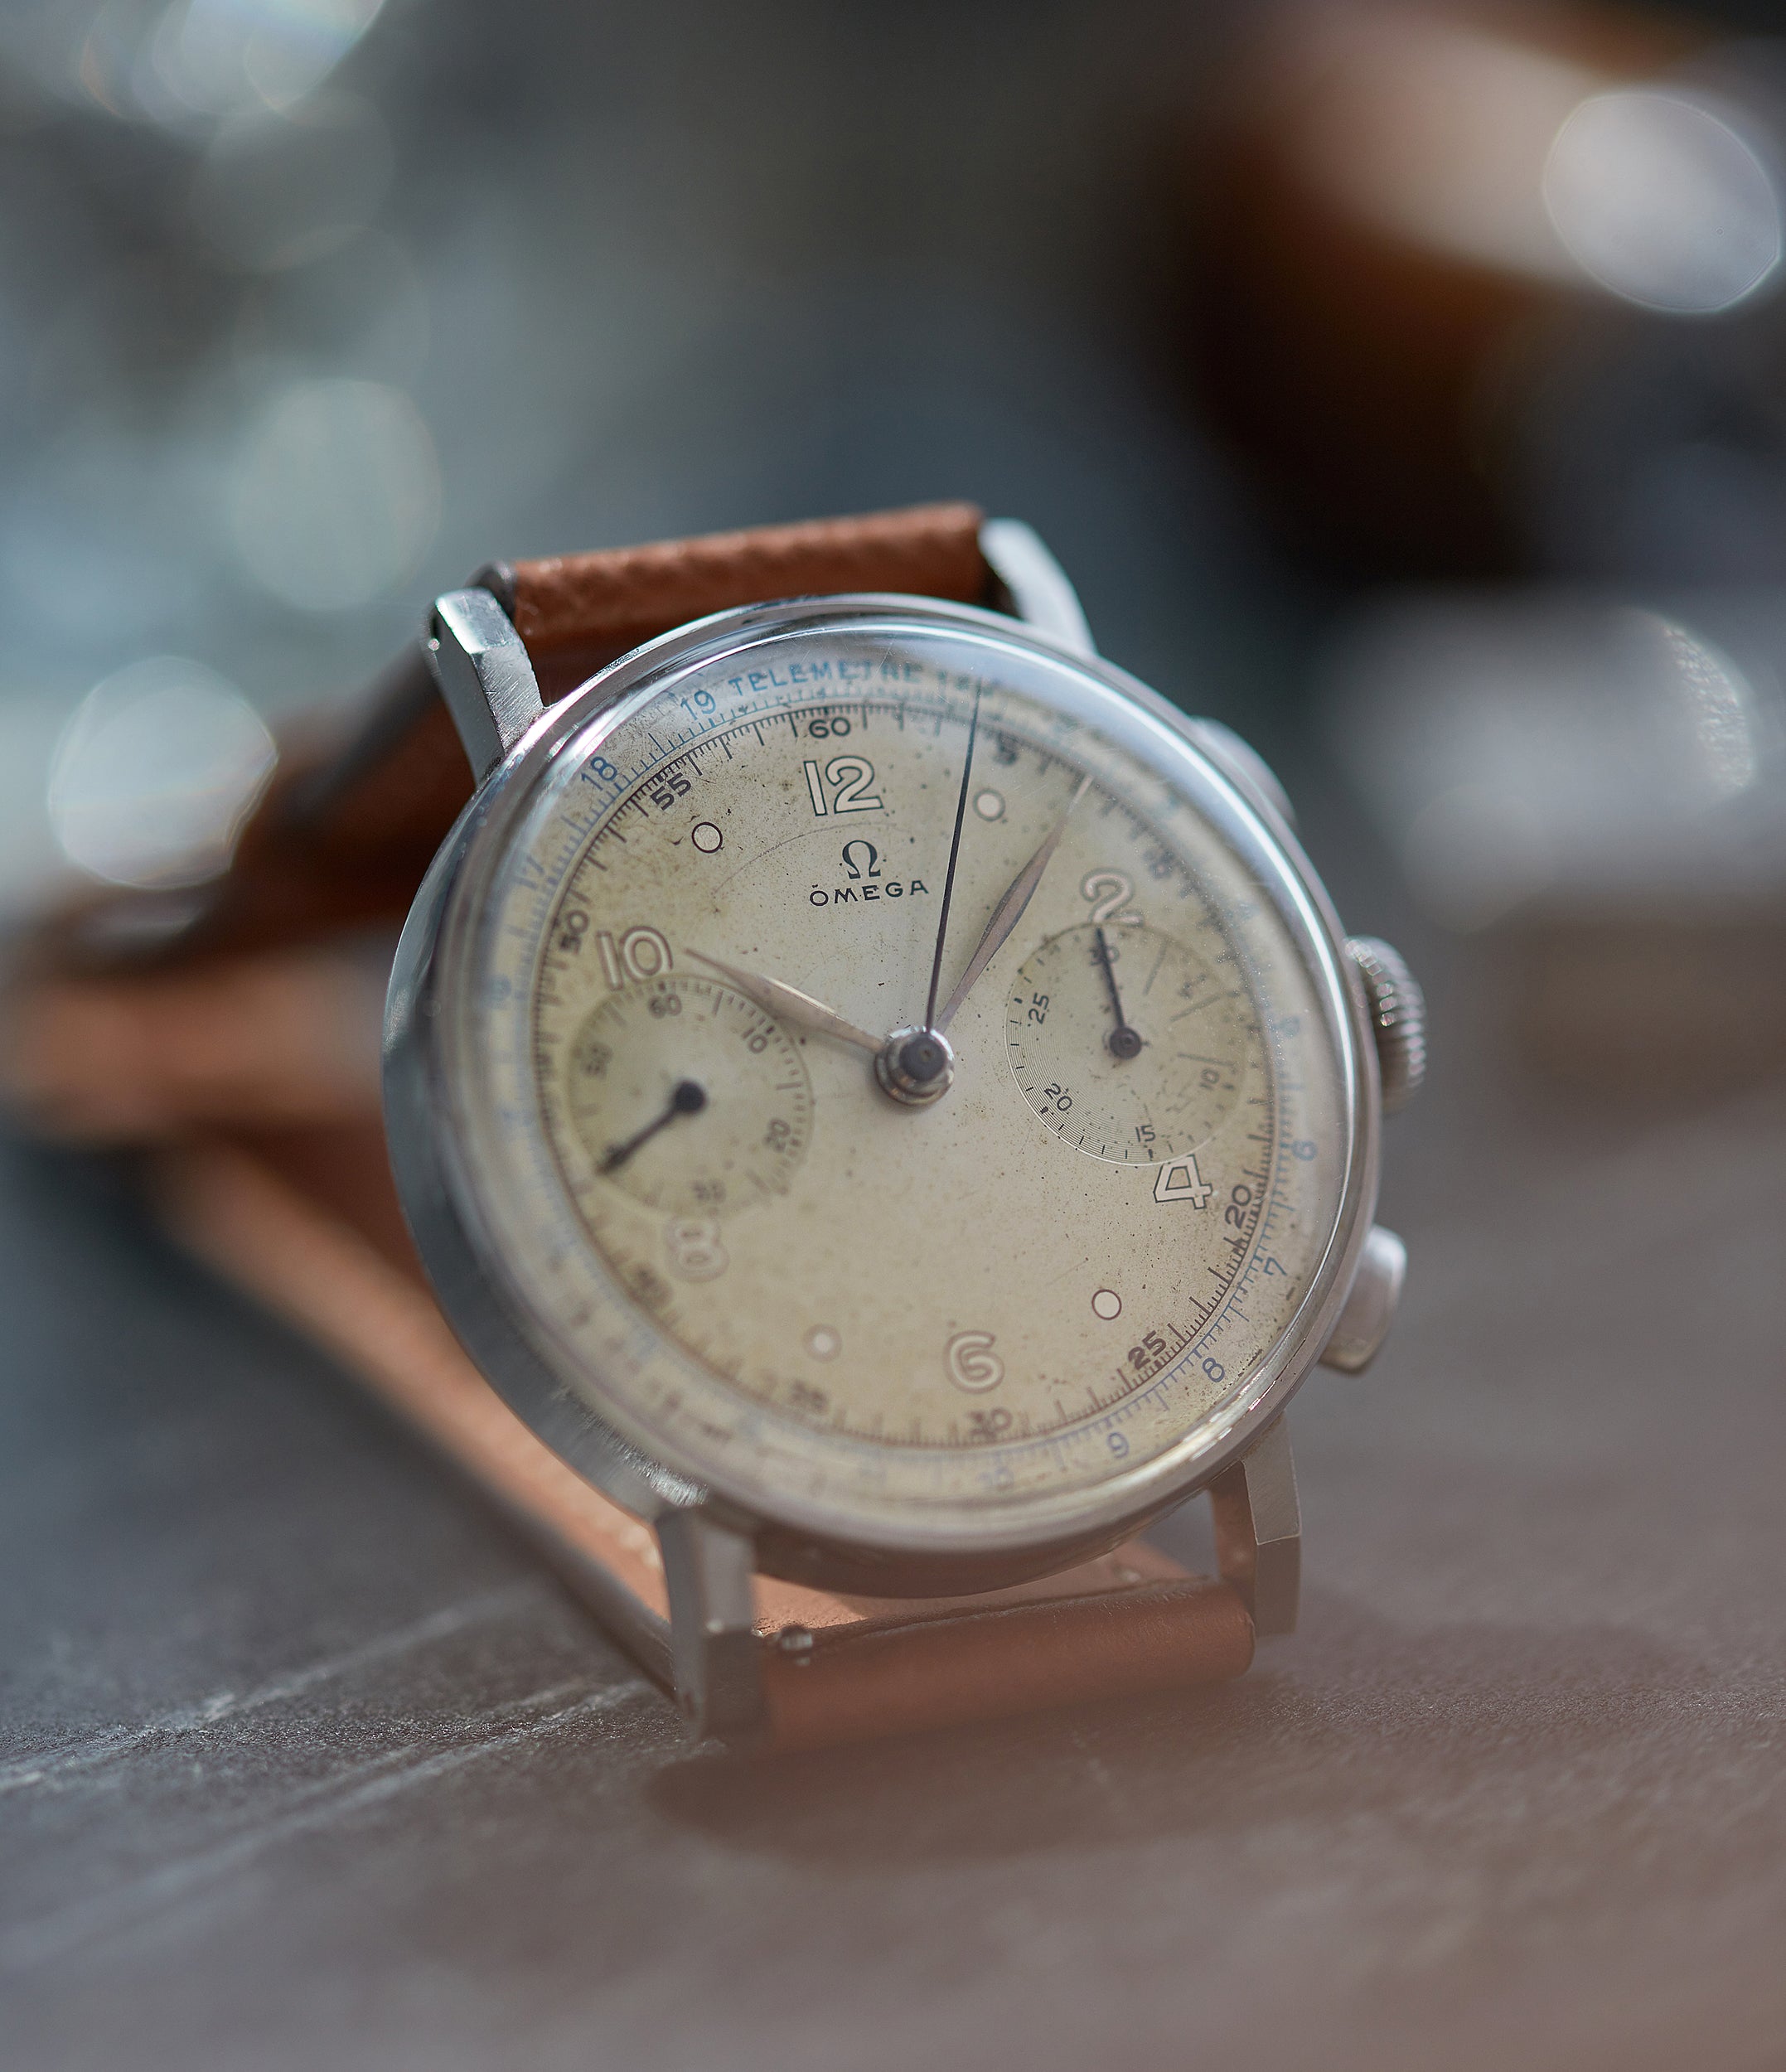 Omega CK 2393 Oversized chronograph watch | Buy vintage Omega watch